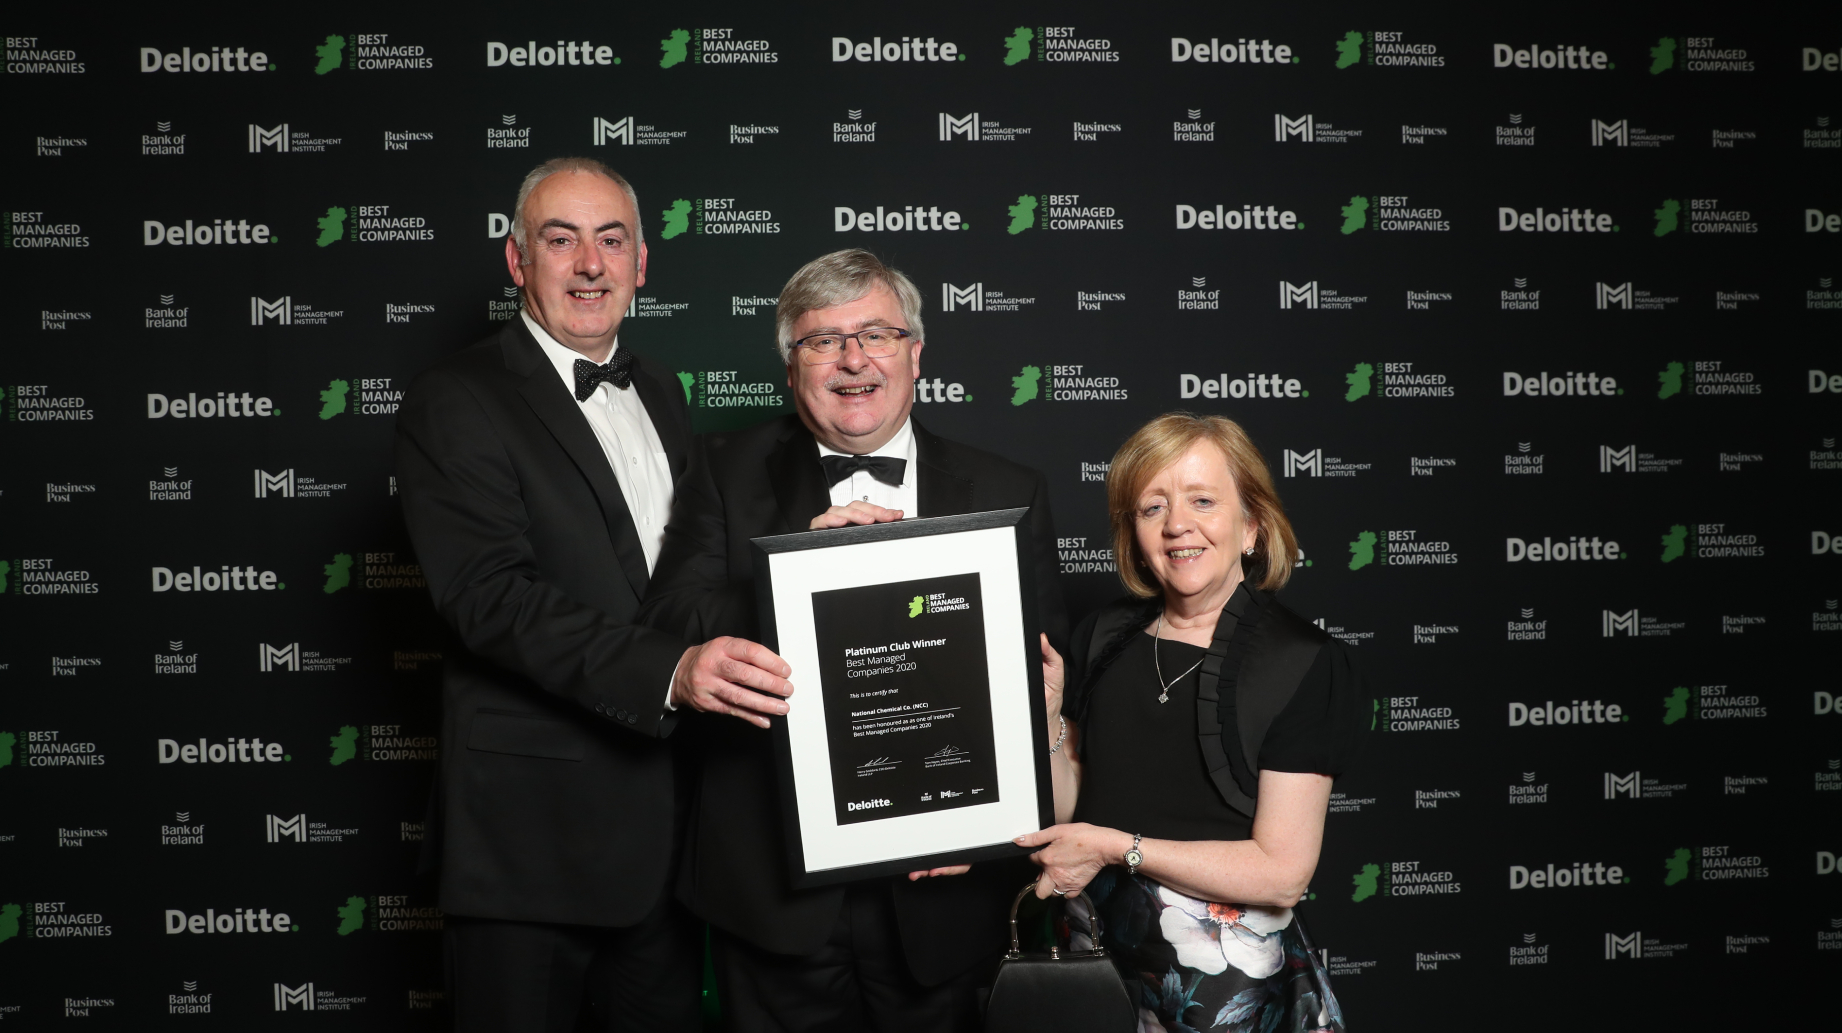 Deloitte Best Managed Companies Award - Public Relations